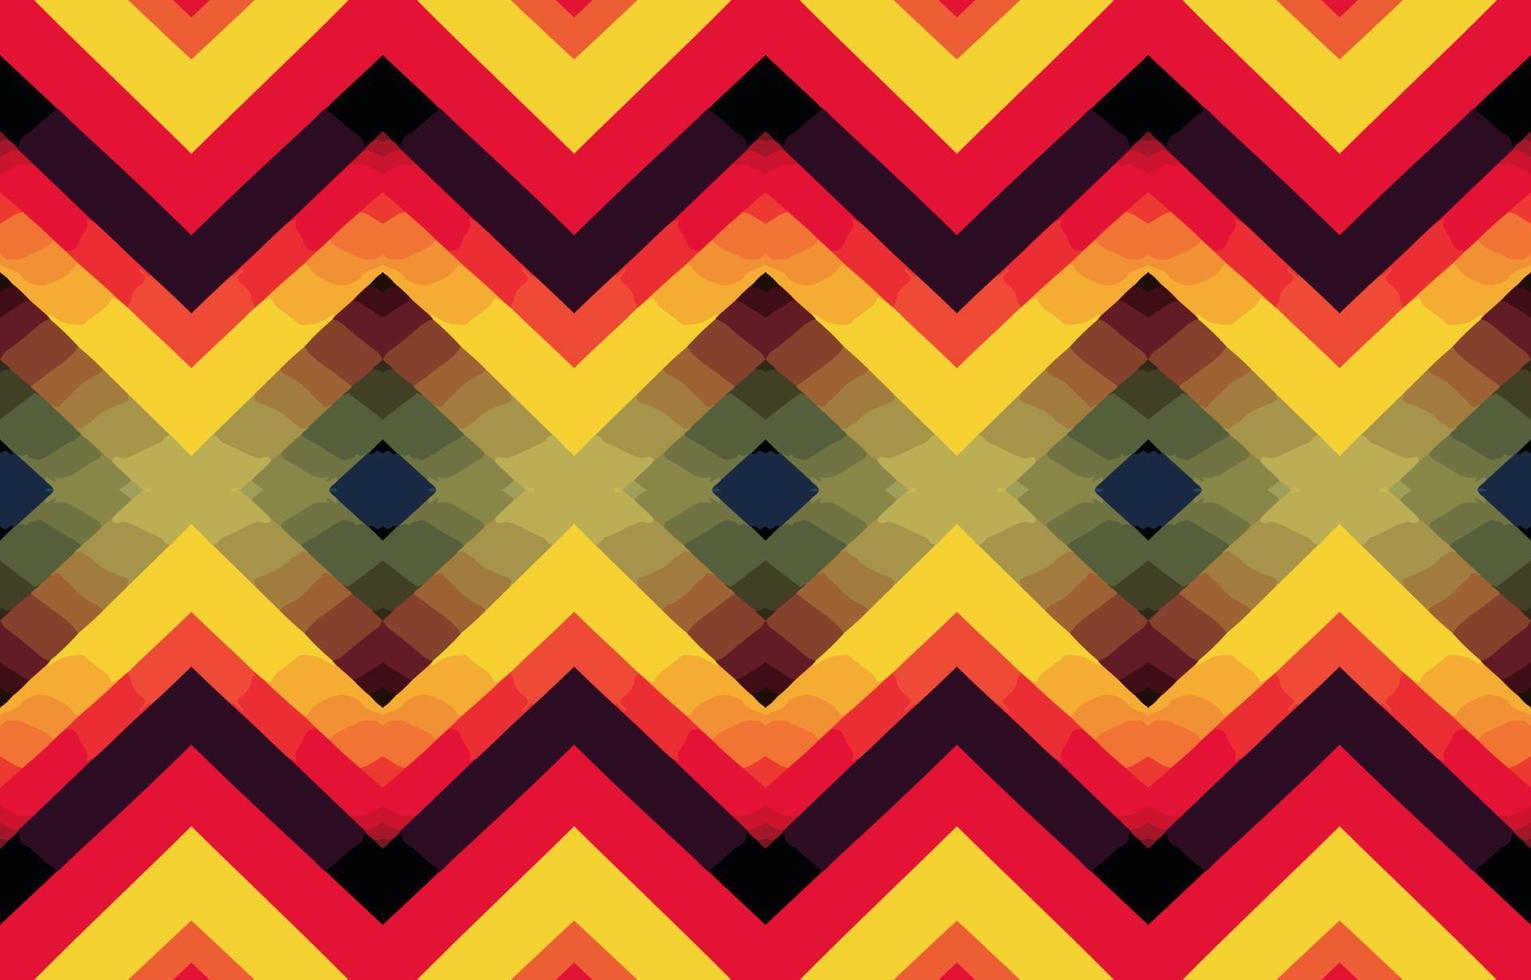 Zigzag seamless pattern. Abstract folk ethnic tribal geometric graphic zig zag line. Texture textile fabric seamless patterns vector illustration. Ornate elegant luxury vintage retro style.